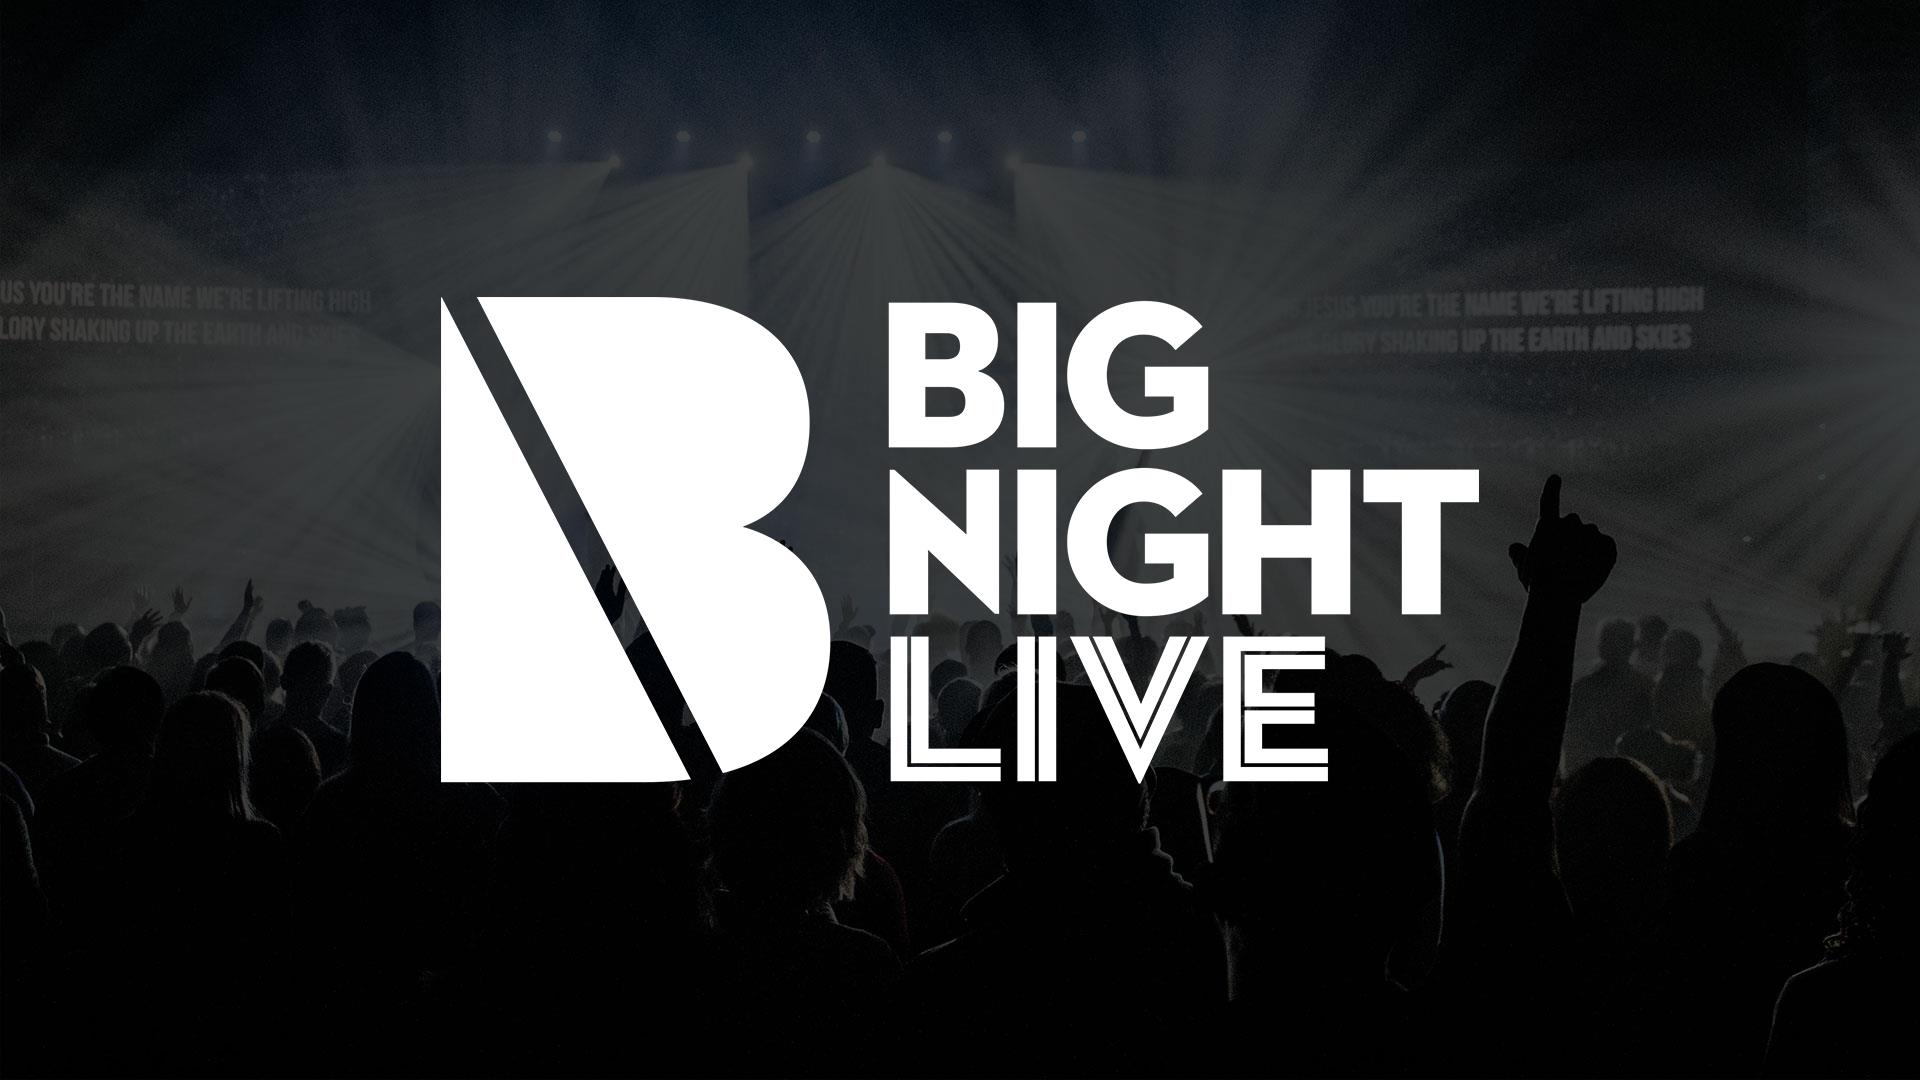 Big Night Live - Public Relations